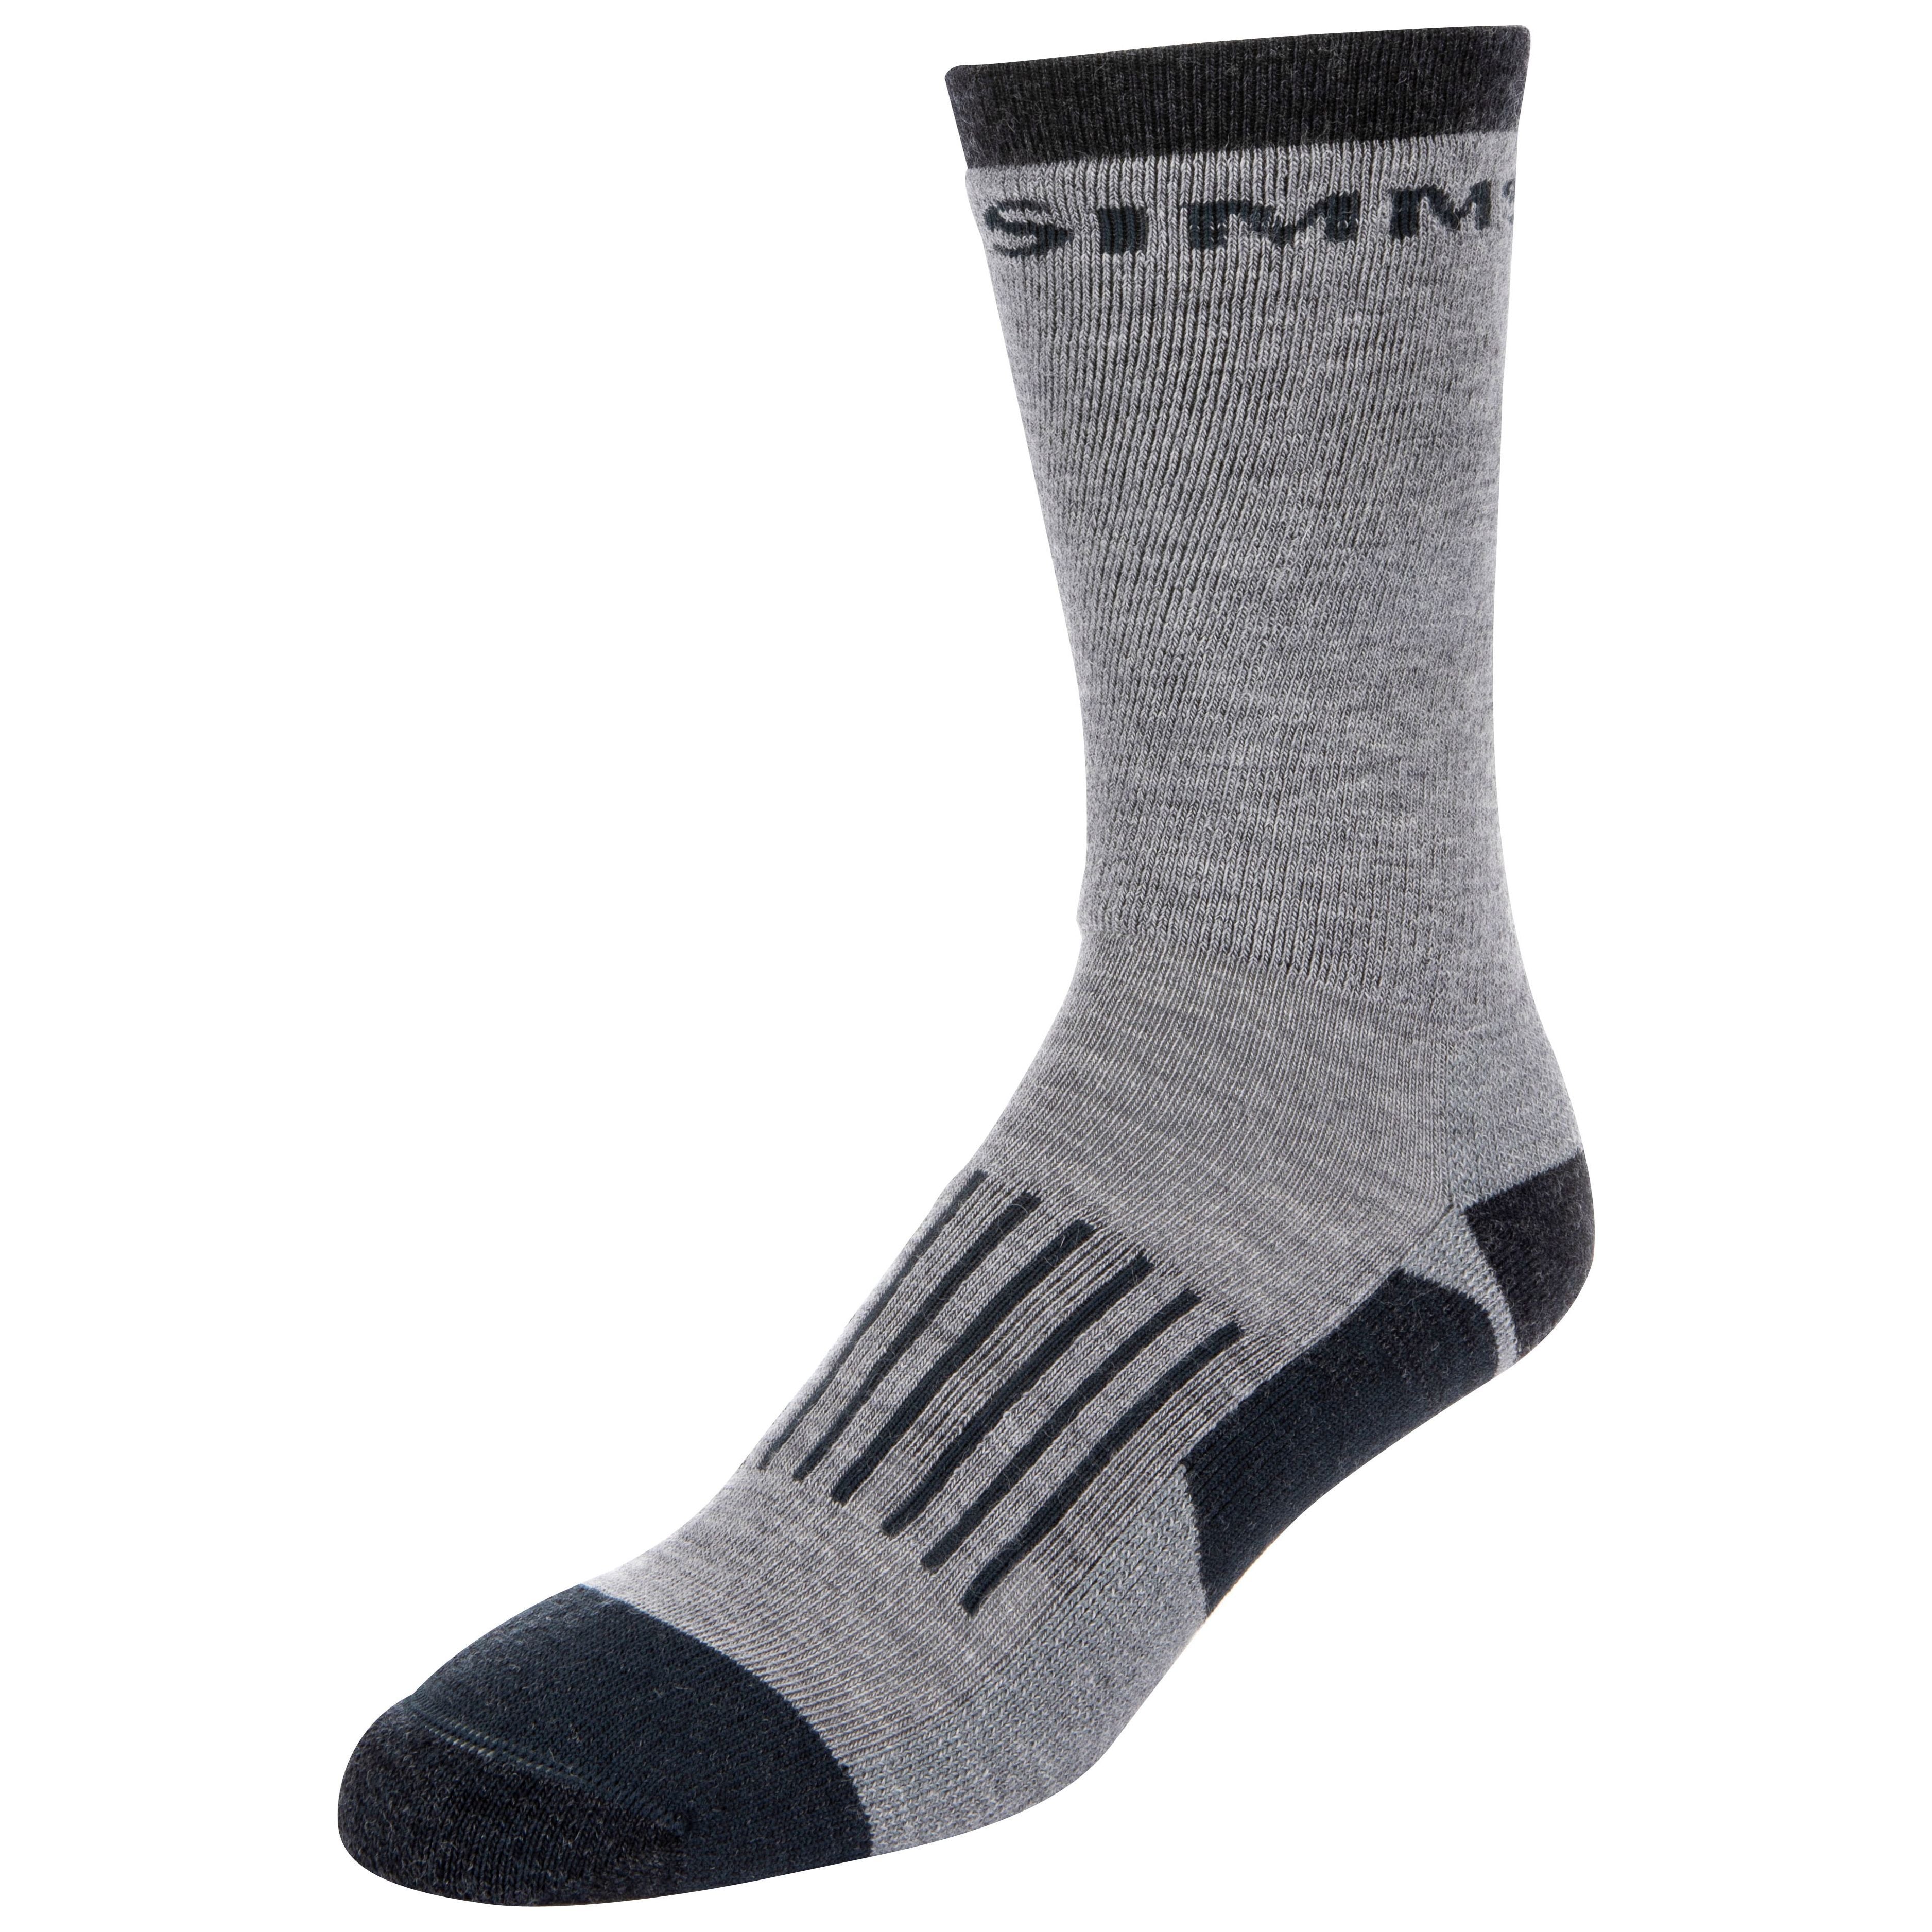 Simms Merino Midweight Hiker Socks Steel Grey Image 1